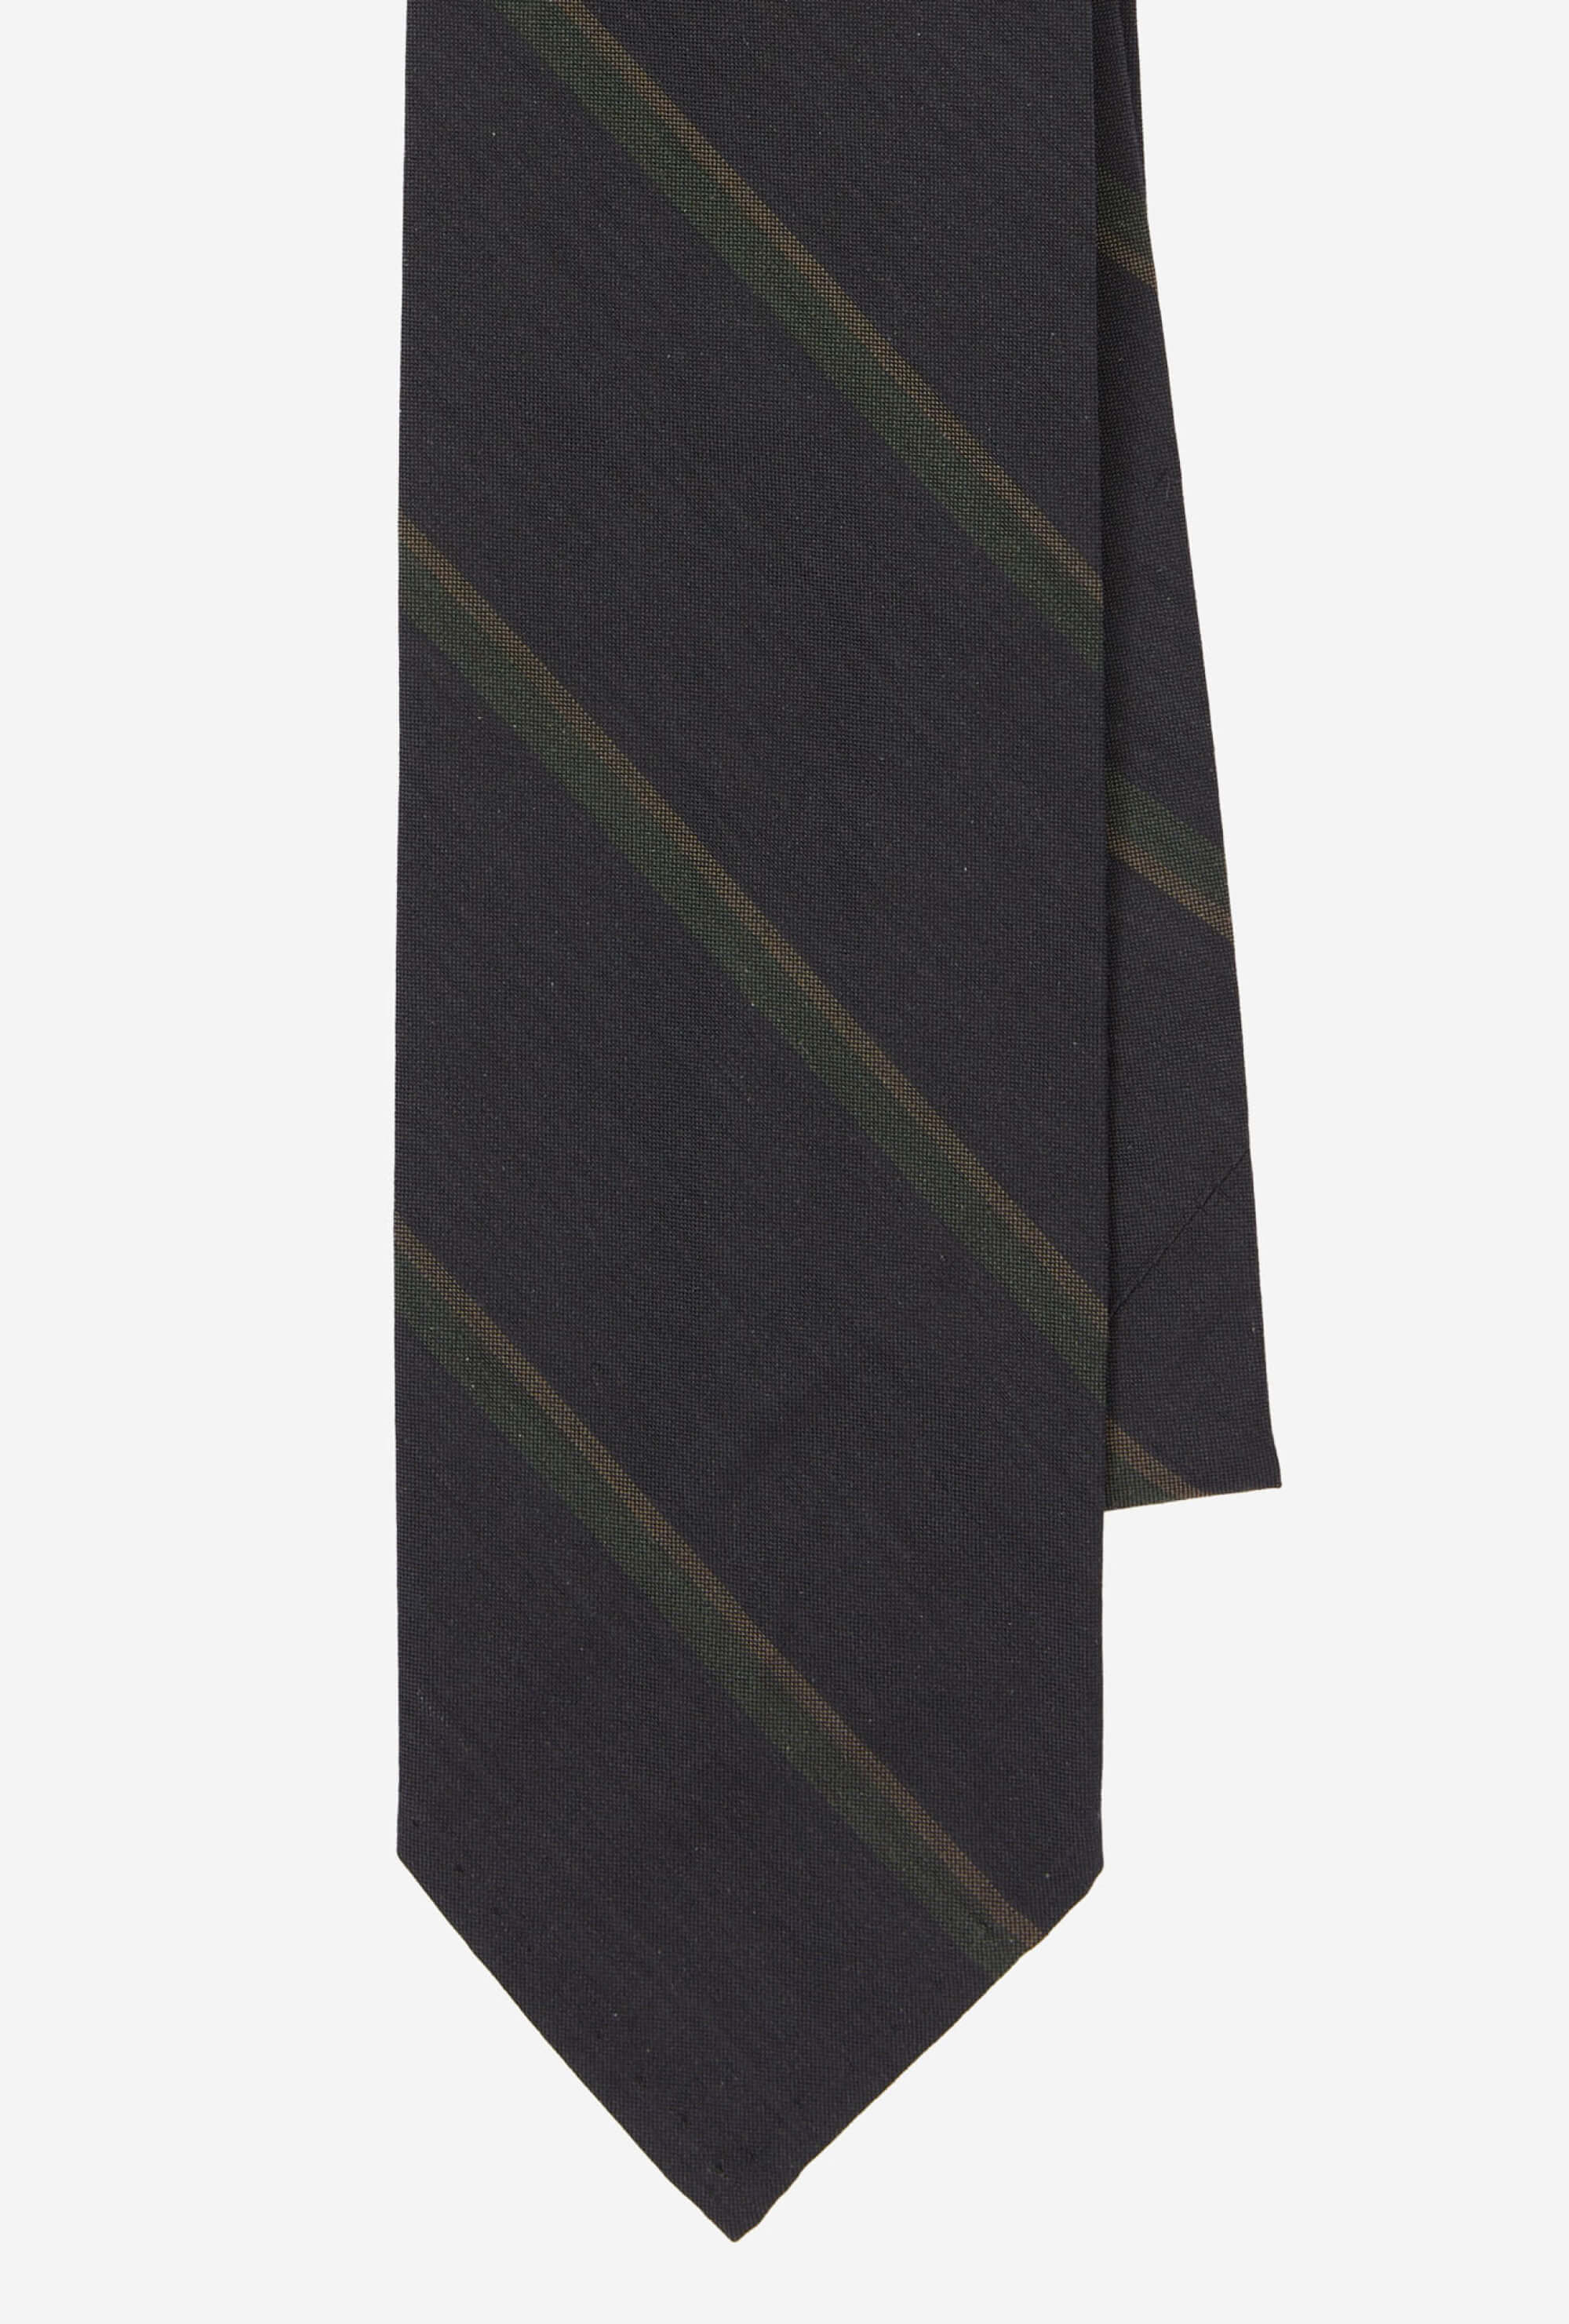 Dry Silk Tie Midnight Green Gold Stripe